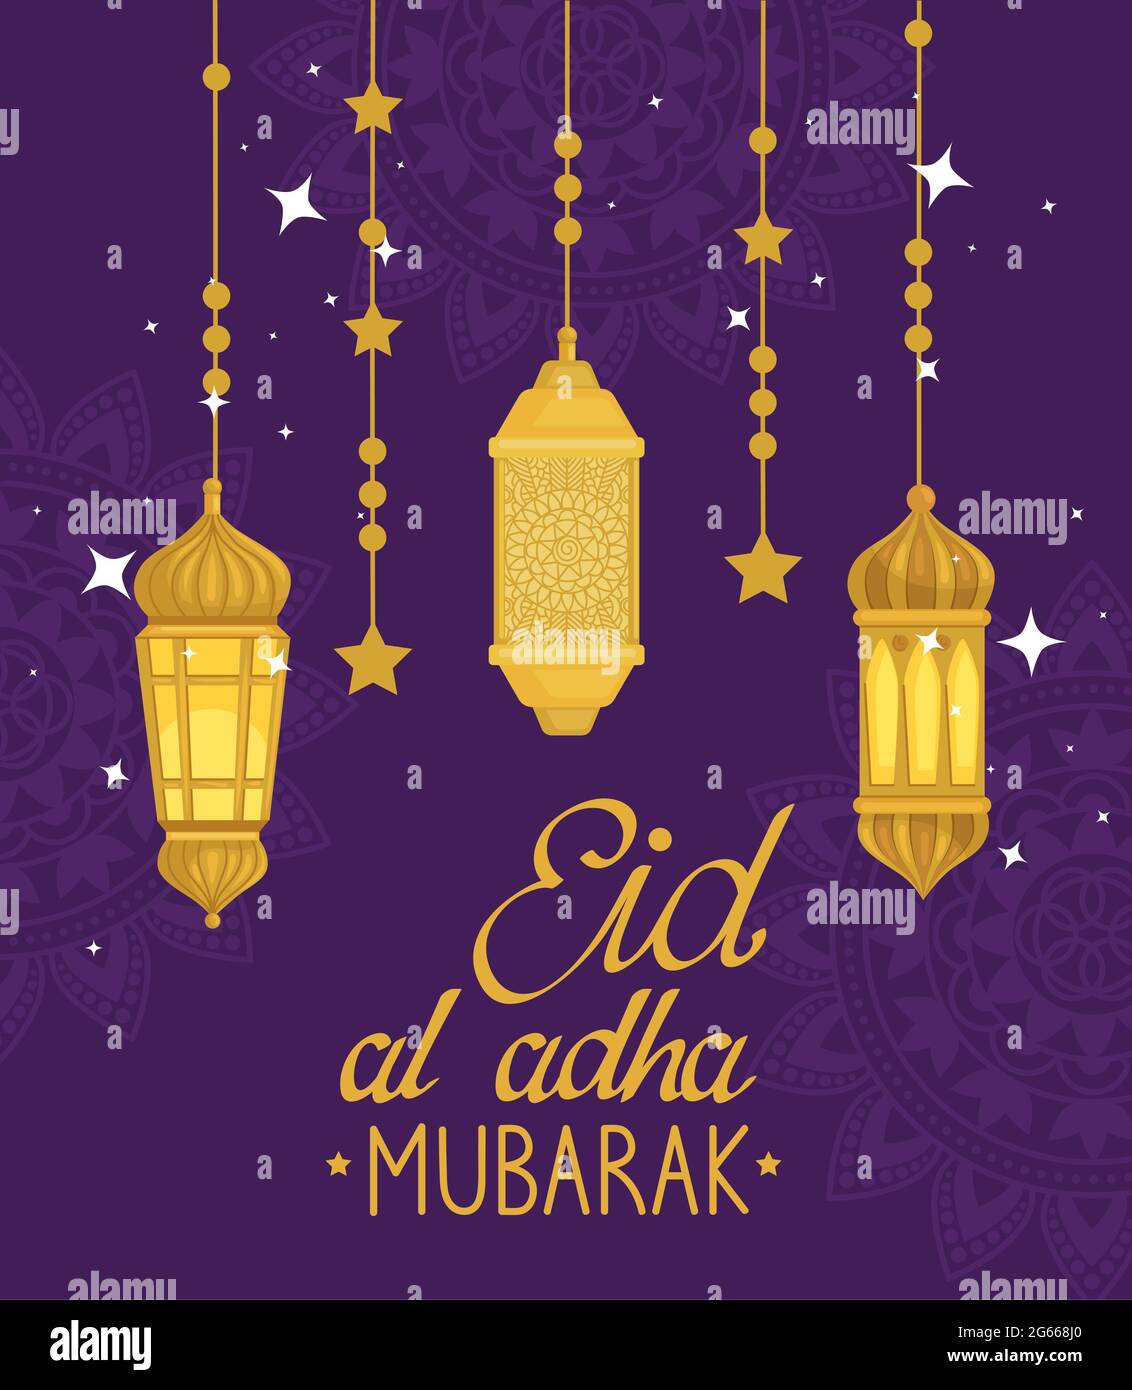 Eid al adha mubarak gold lanterns hanging Stock Vector